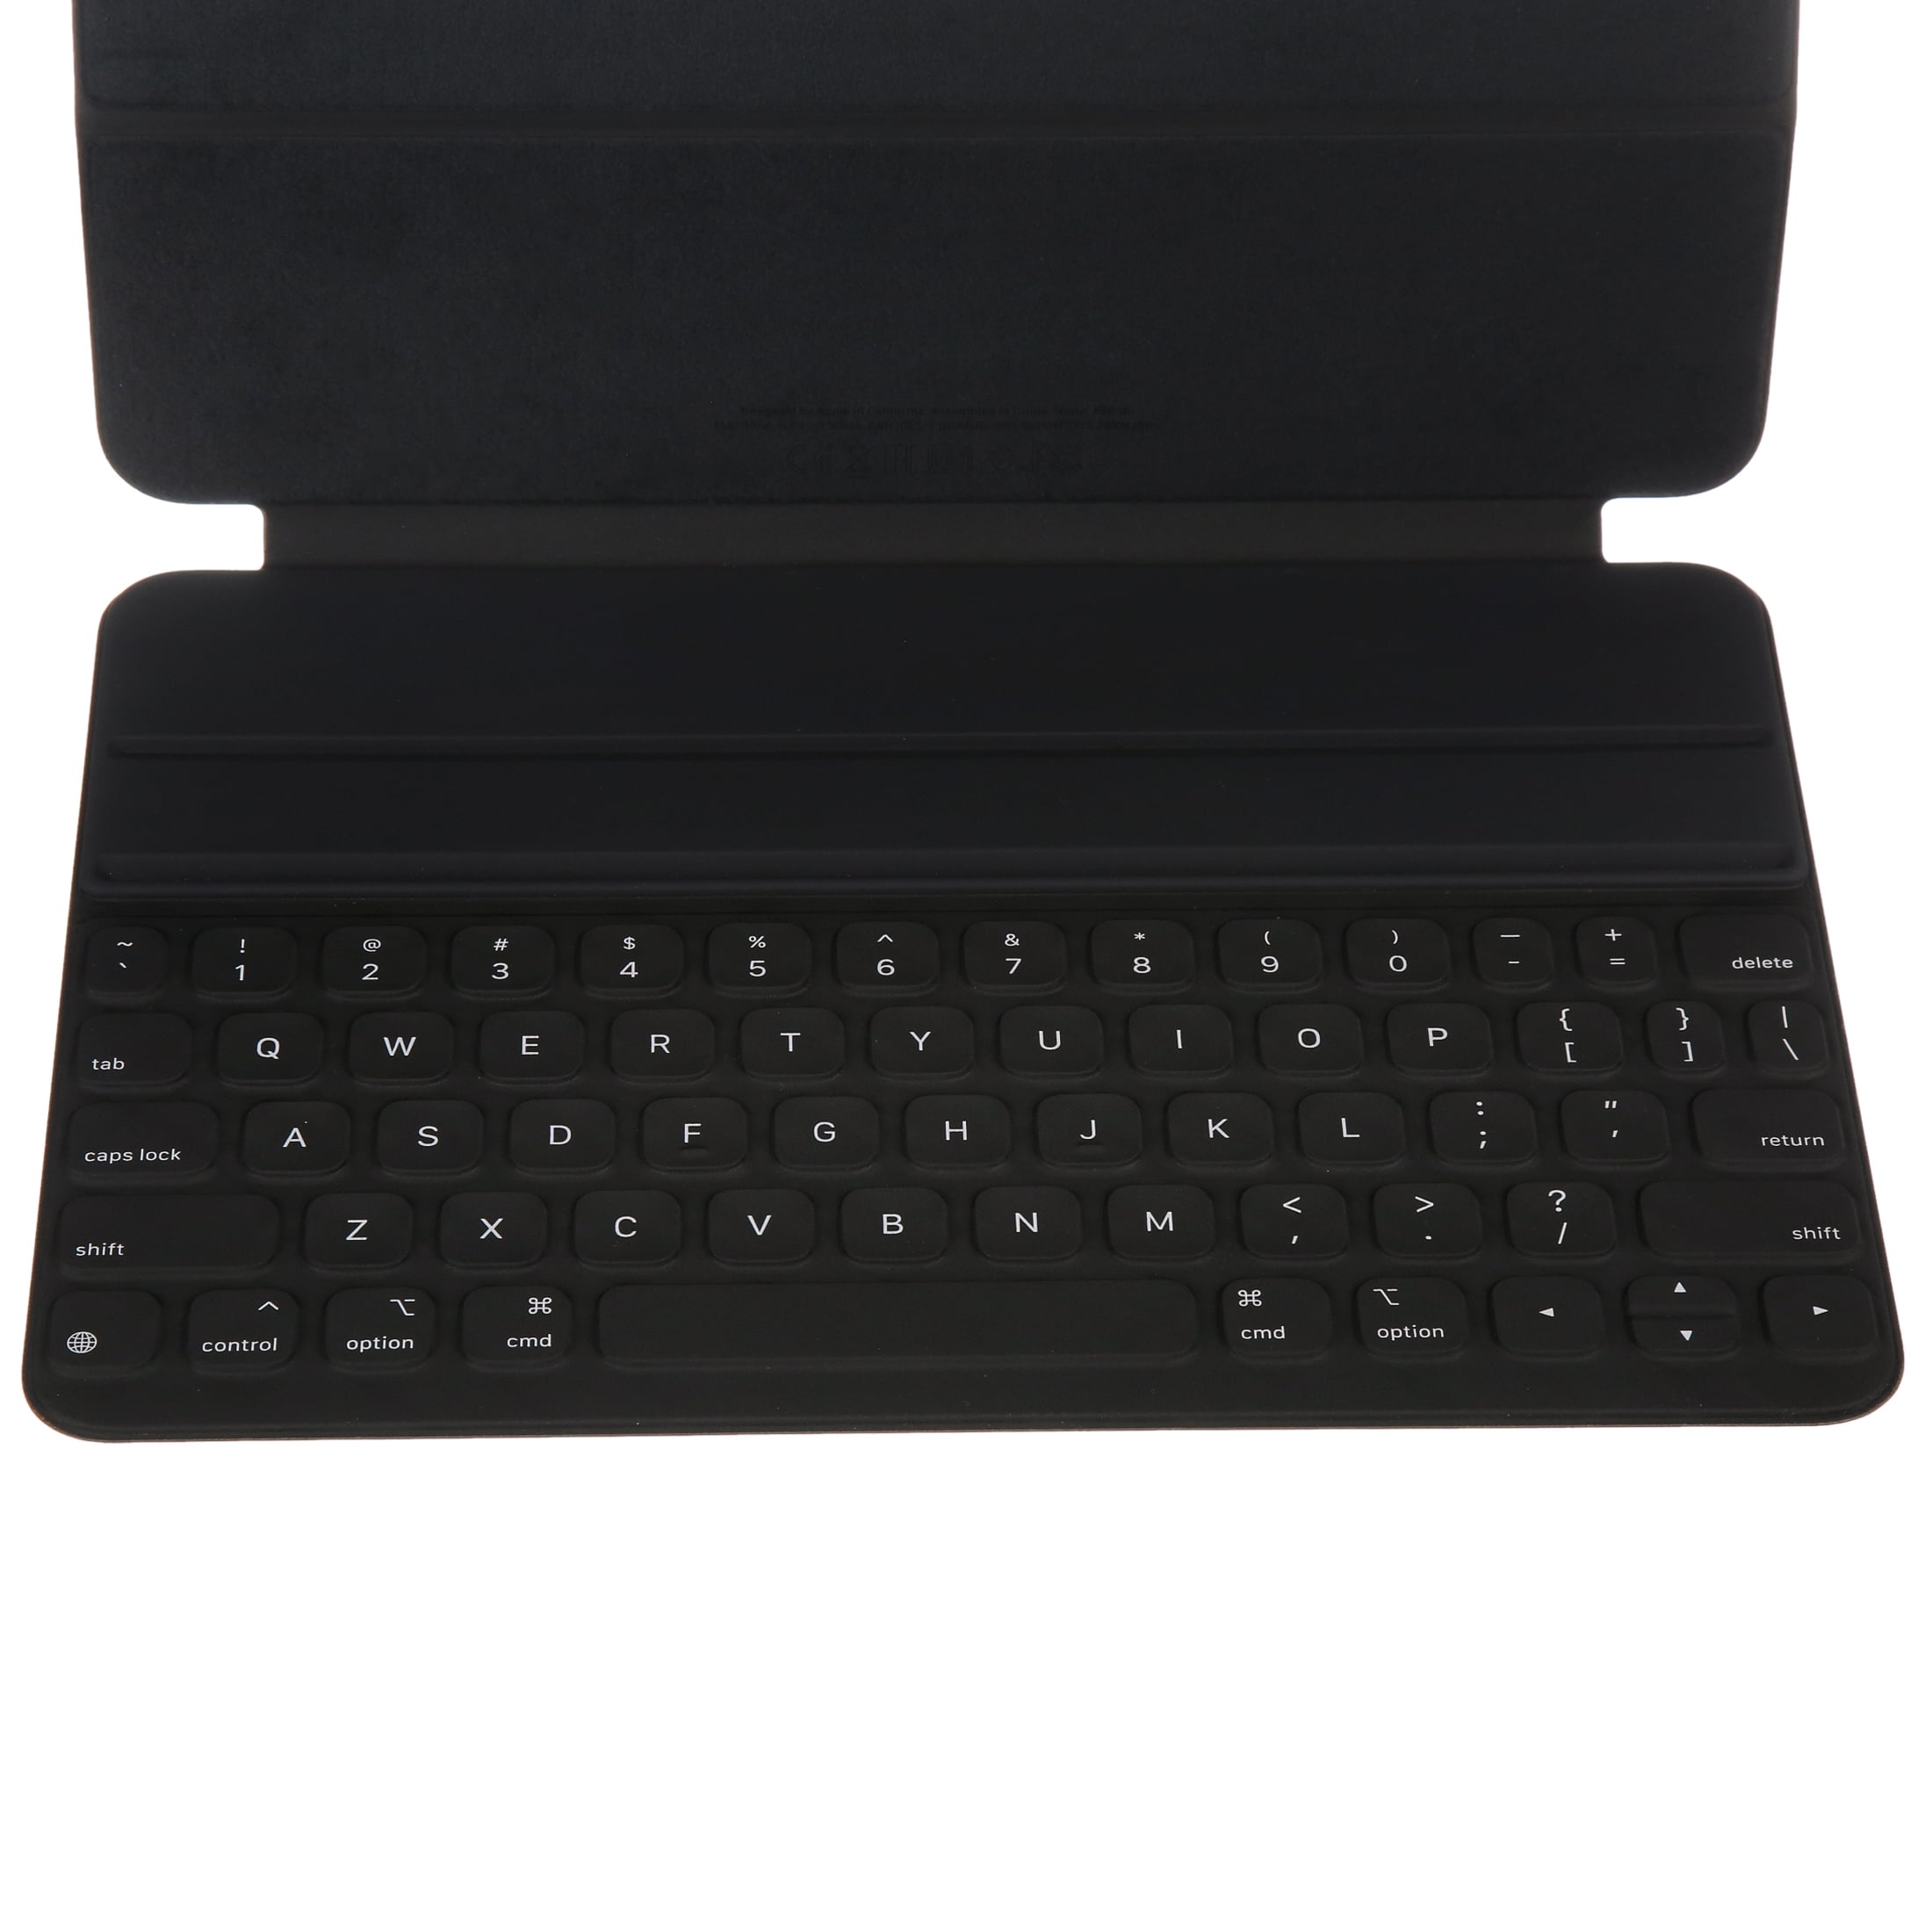  Apple Smart Keyboard Folio: iPad Keyboard case for